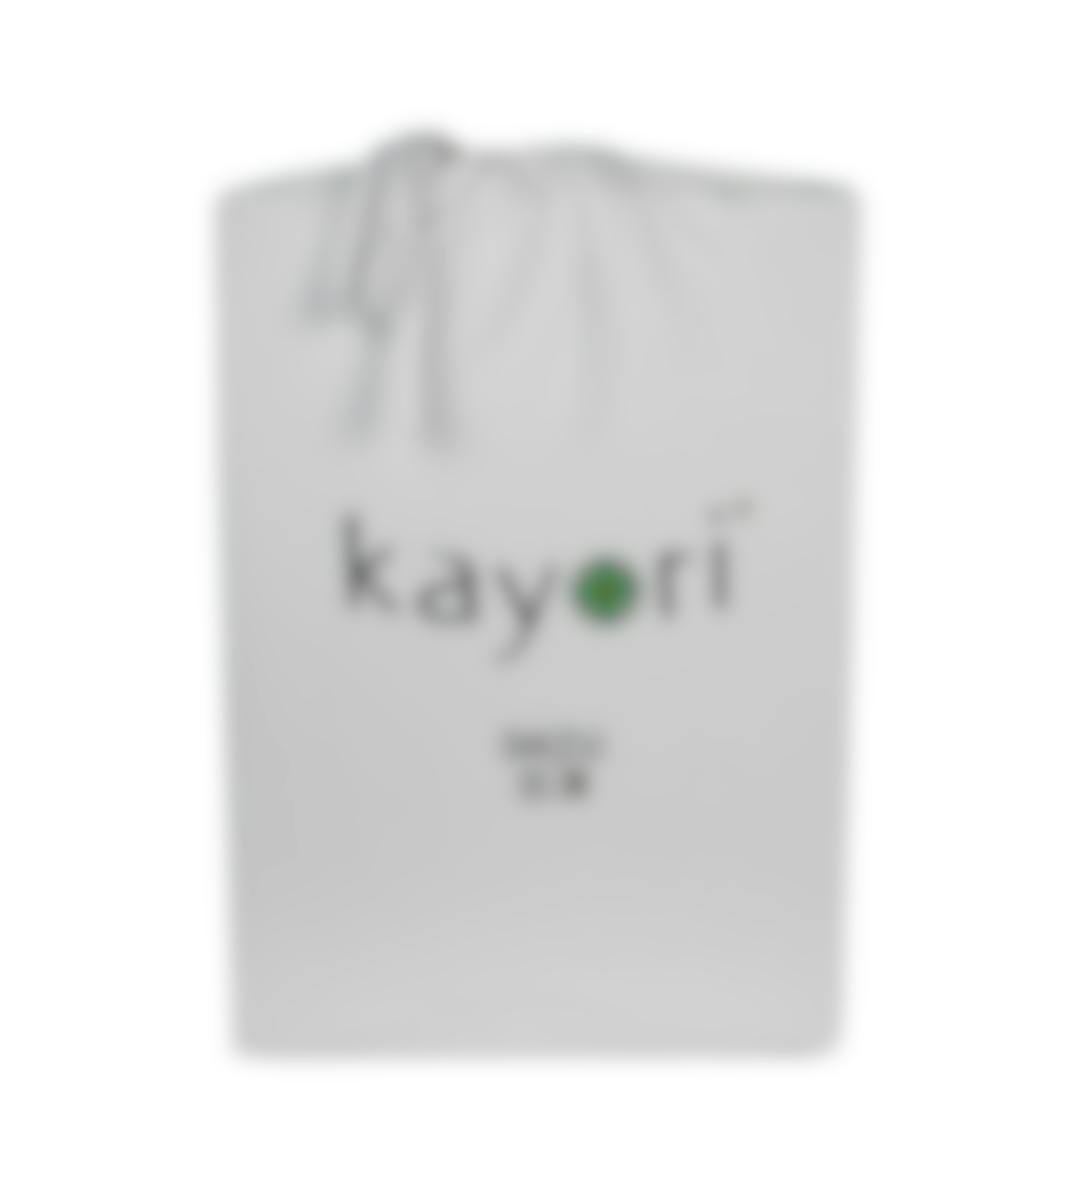 Kayori drap-housse Shizu Grey Jersey de coton (coin 35 cm) 90-100 x 200-220 cm